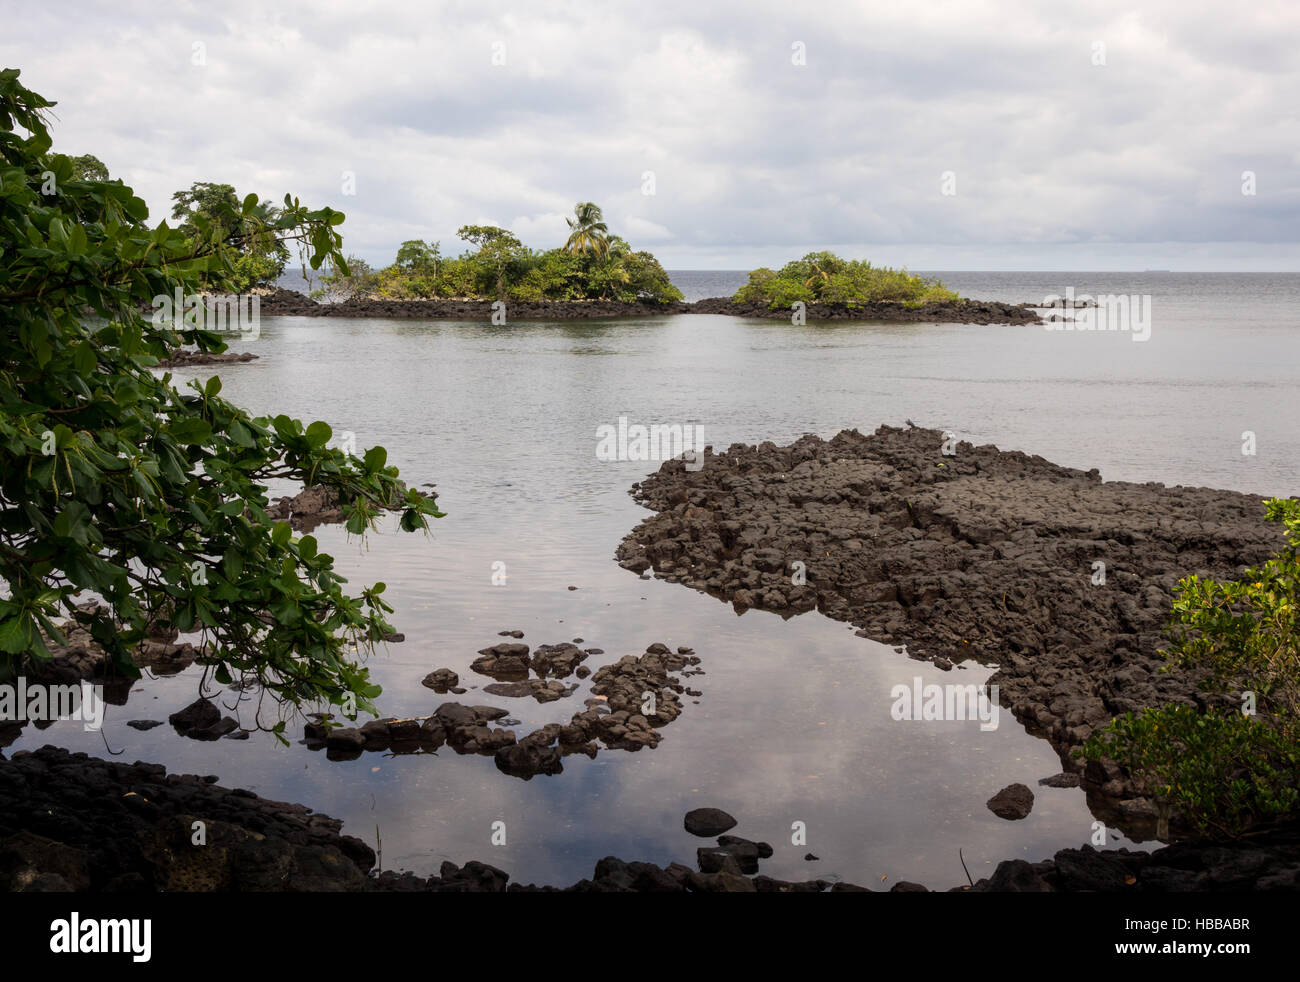 Offshore island in Malabo, Equatorial Guinea Stock Photo